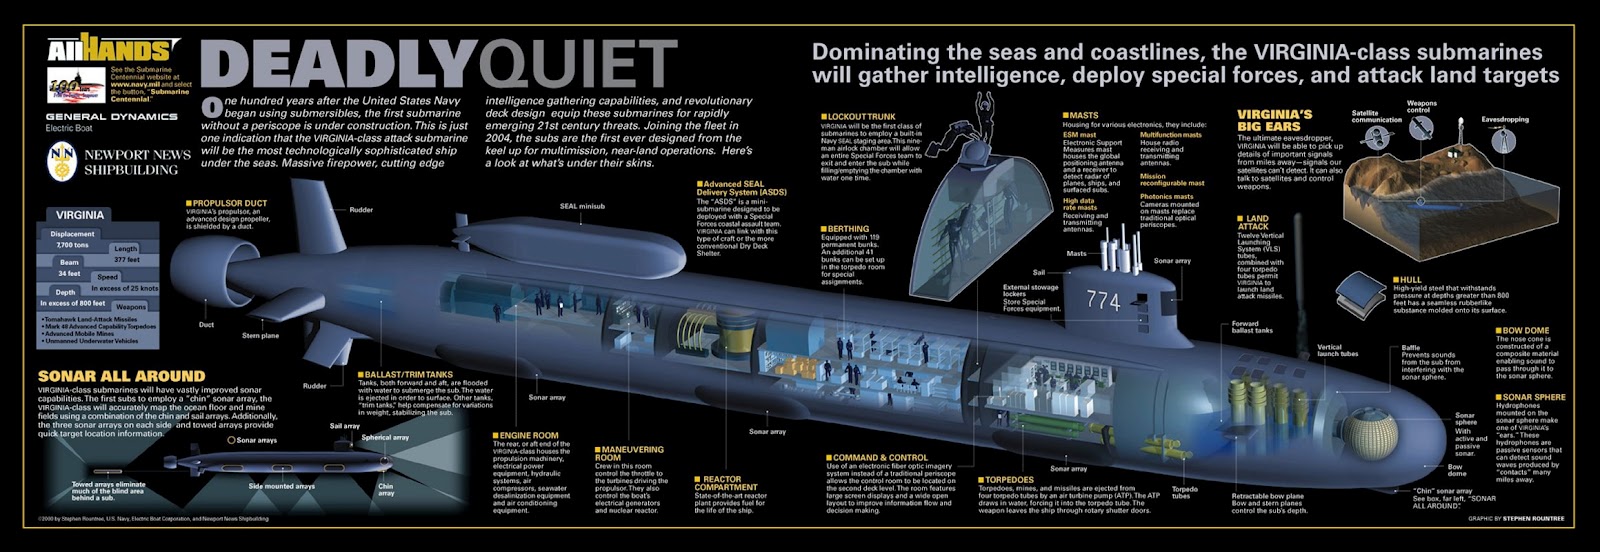 Submarine Matters April 2012